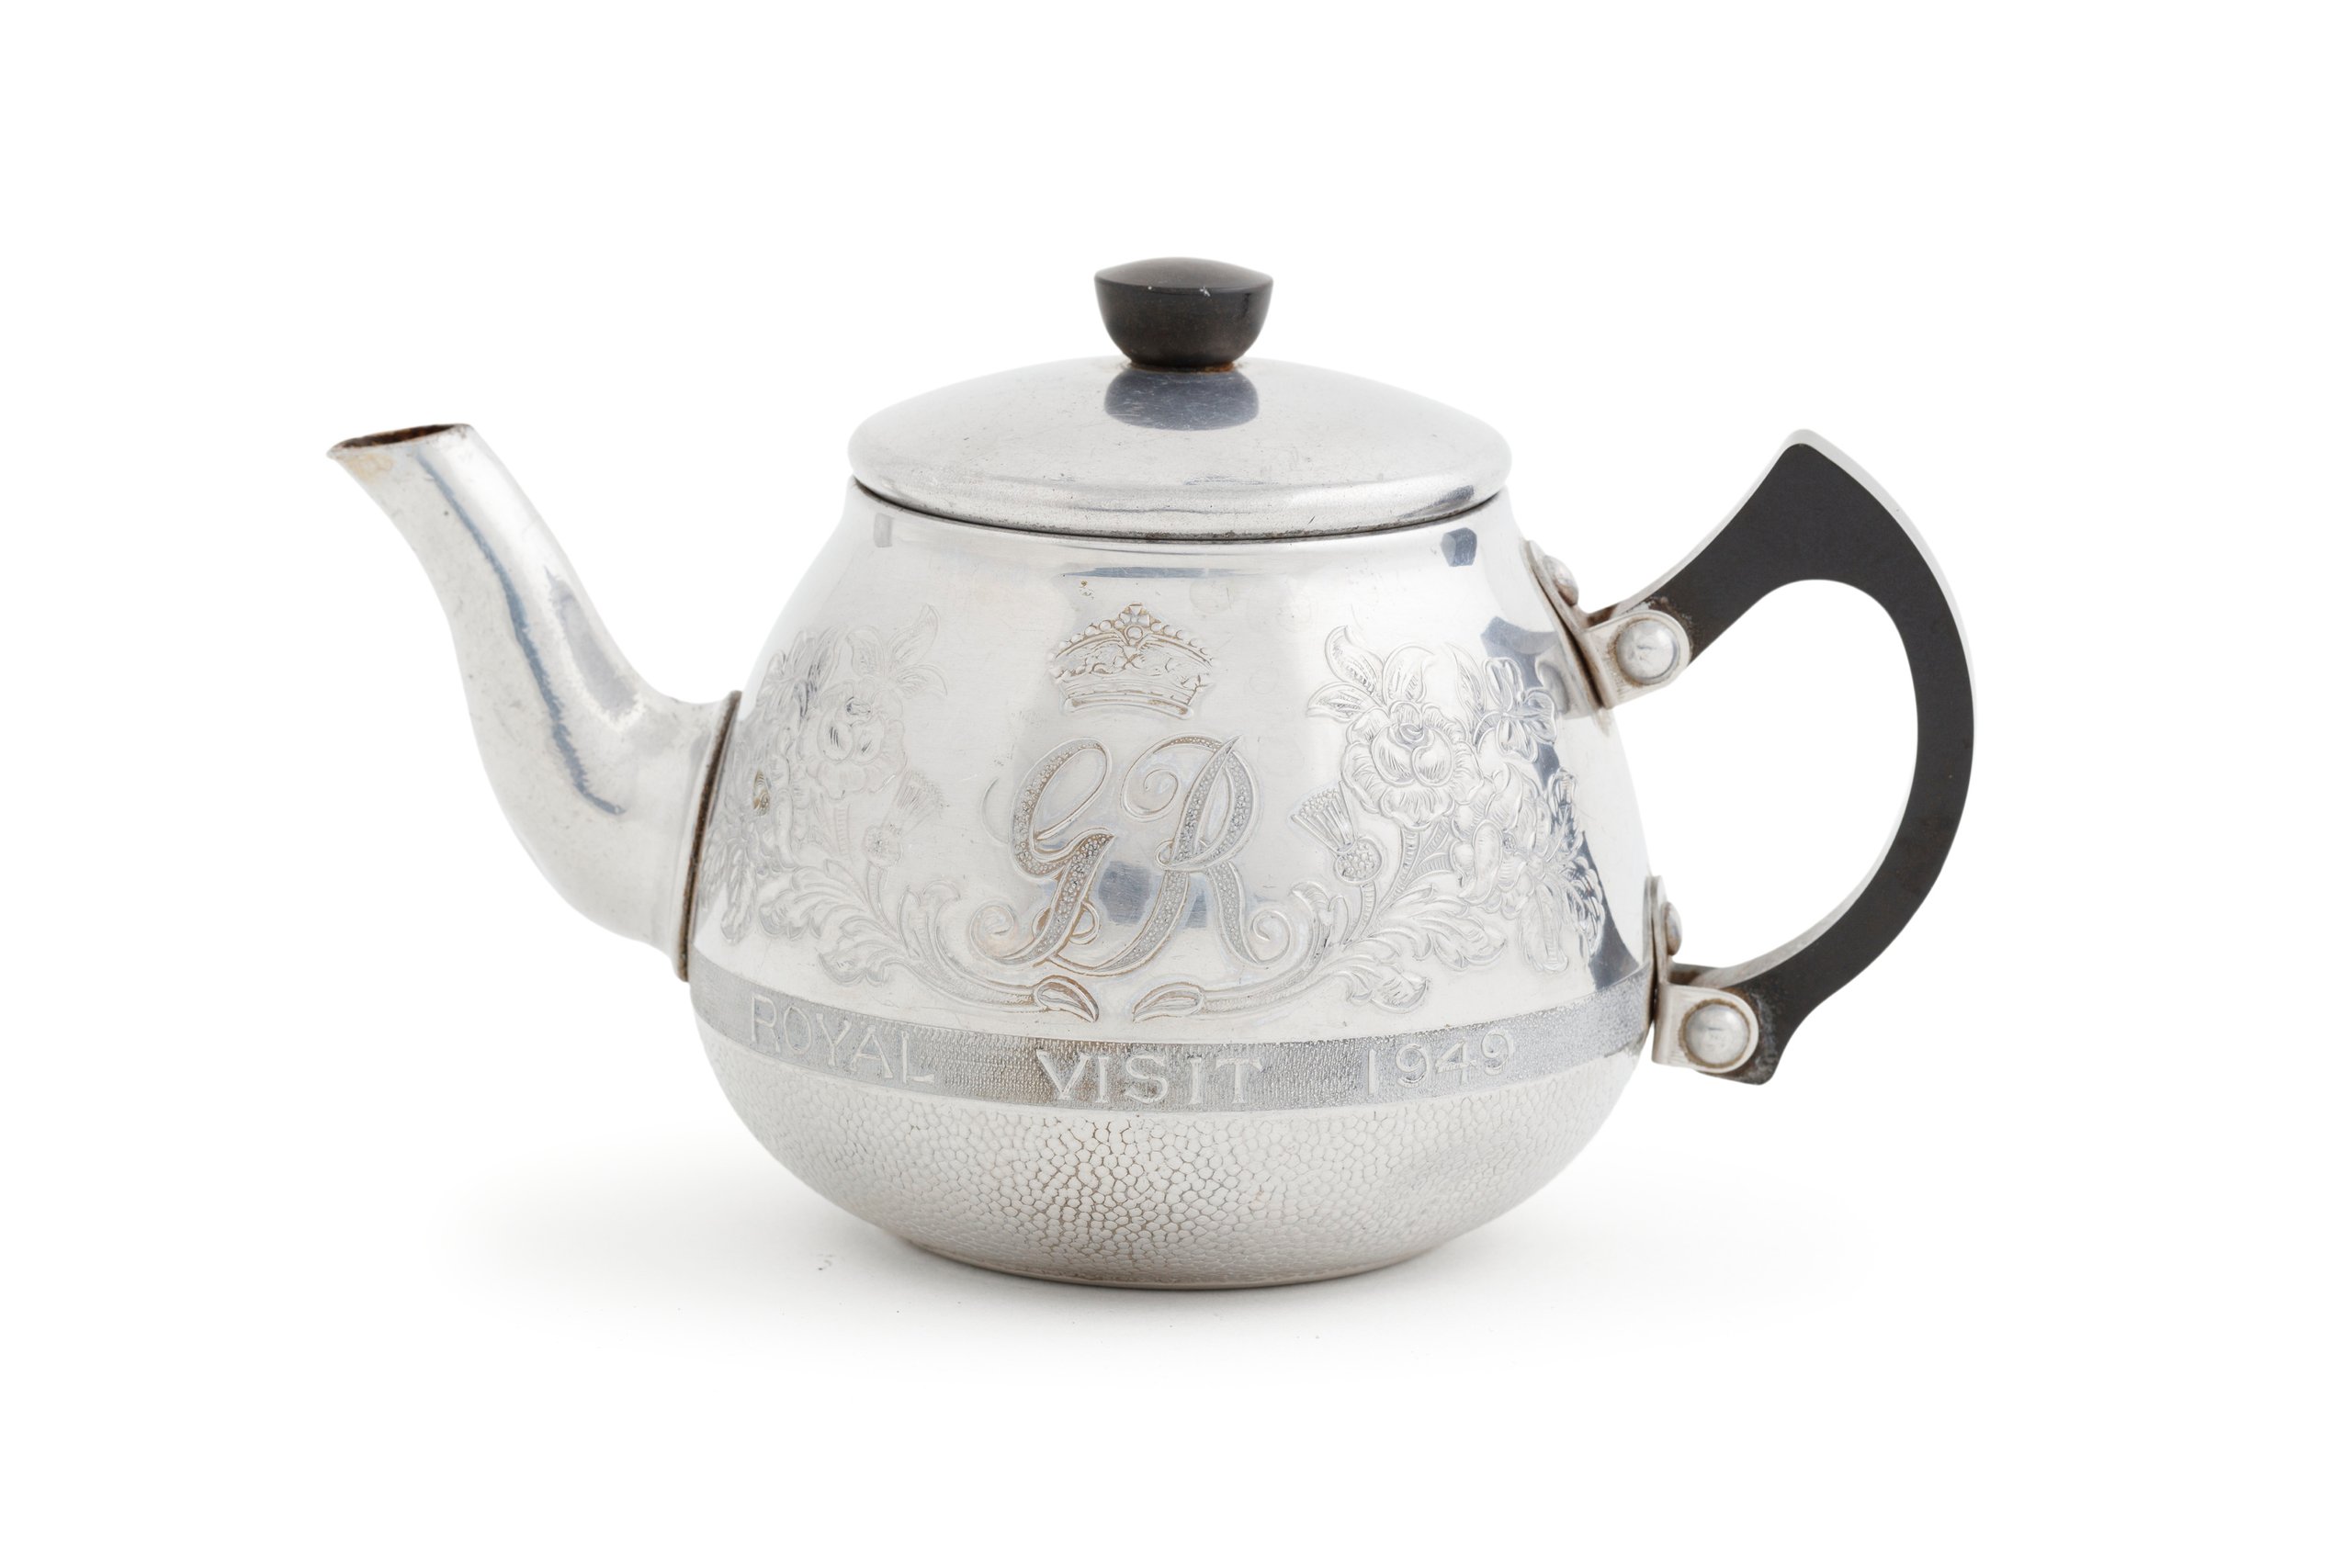 Aluminium teapot commemorating the royal visit to Australia